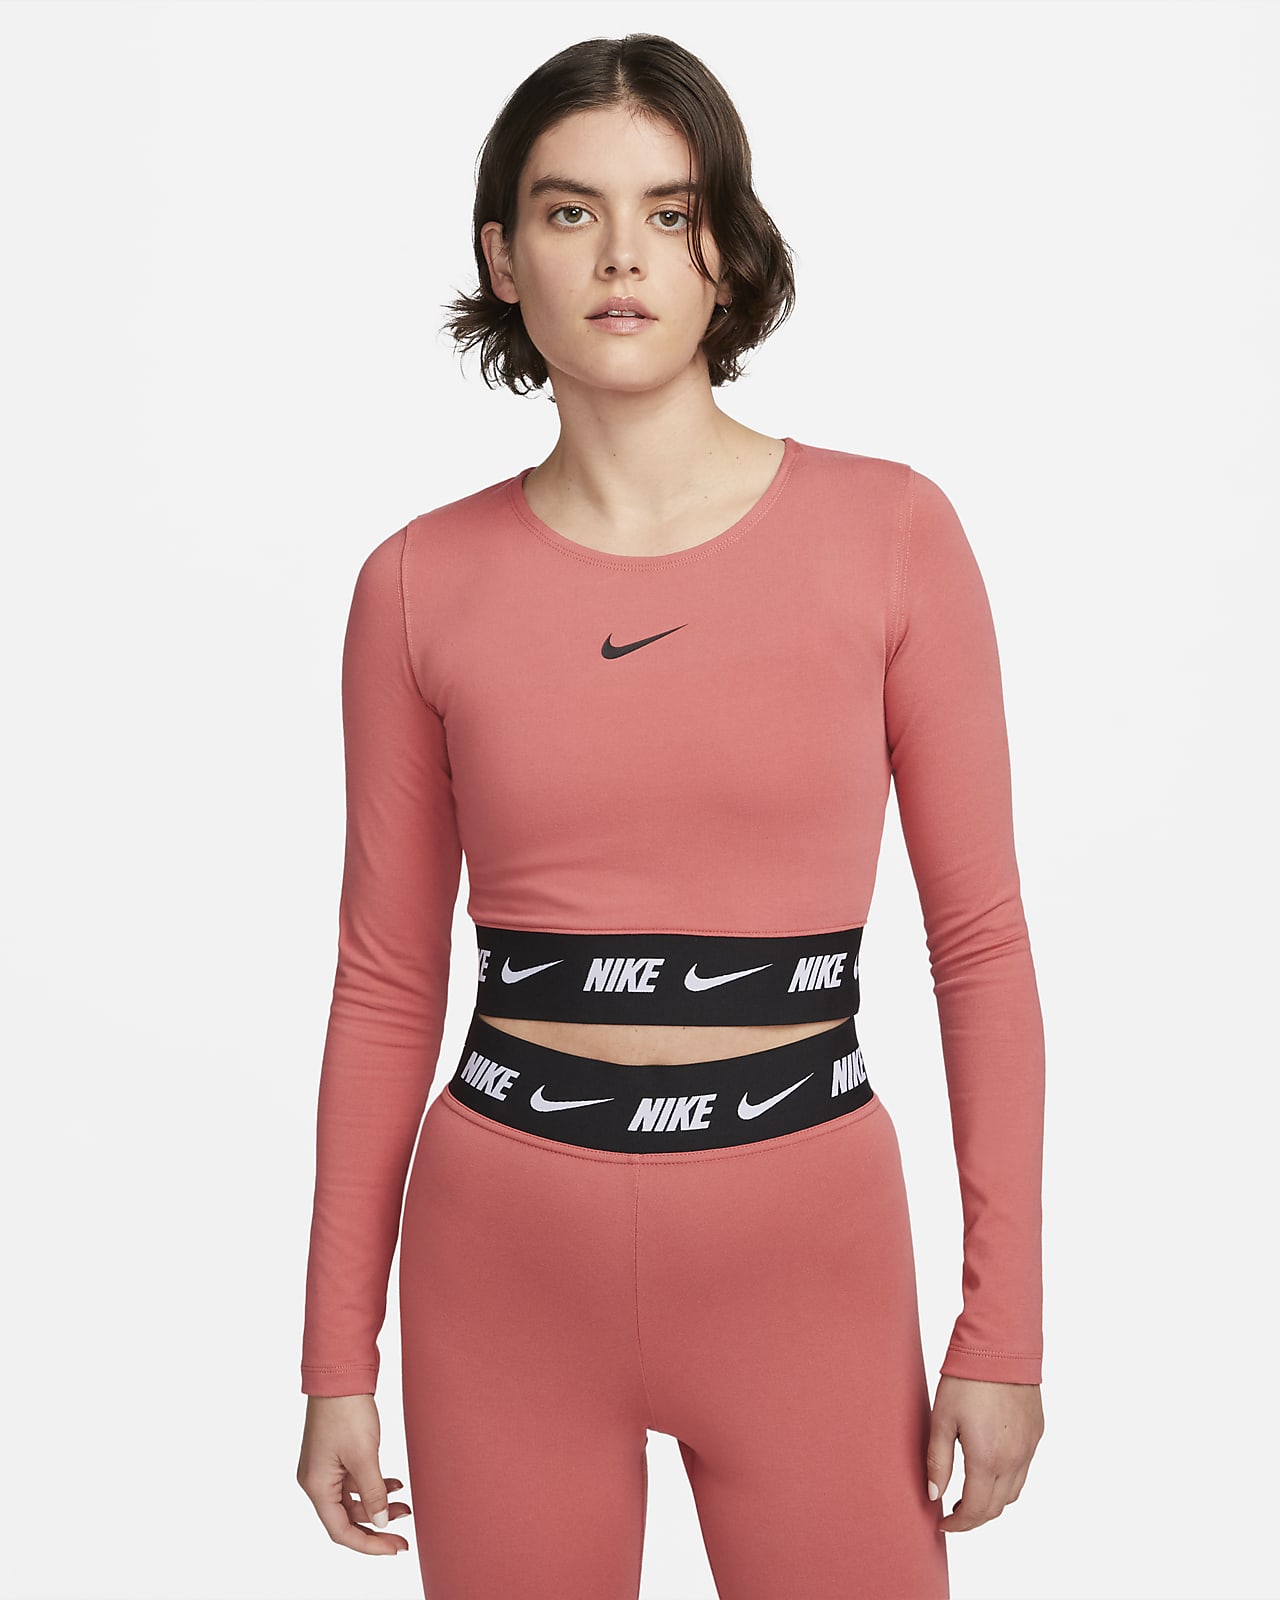 Nike Sportswear Long-Sleeve Crop Top. Nike.com